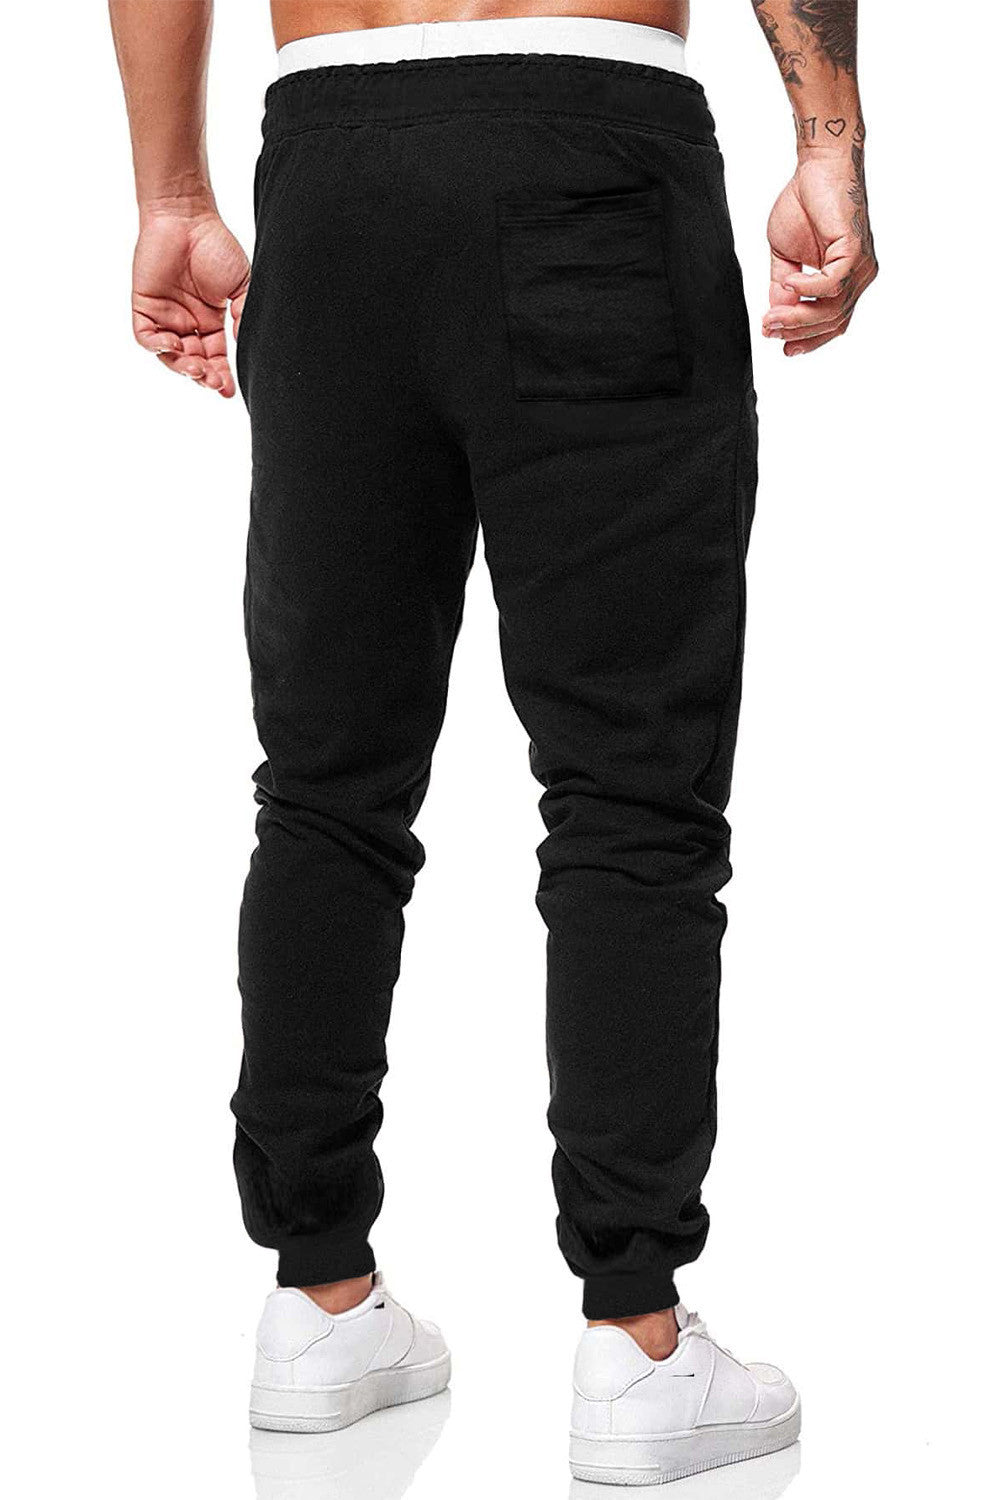 Black American Flag Skull Print Drawstring Men's Sweatpants Men's Pants JT's Designer Fashion